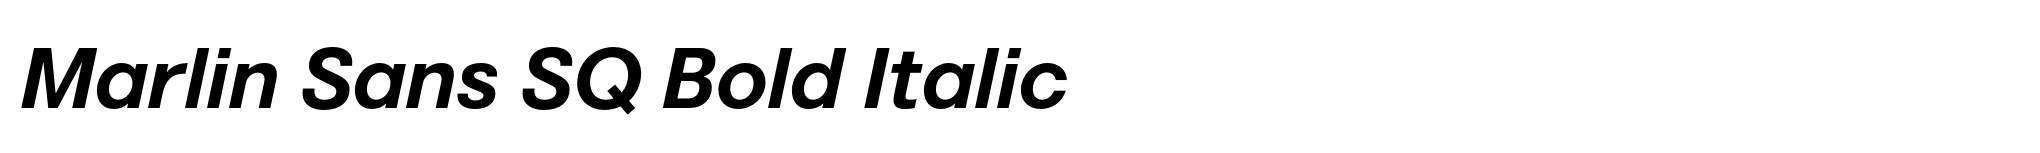 Marlin Sans SQ Bold Italic image